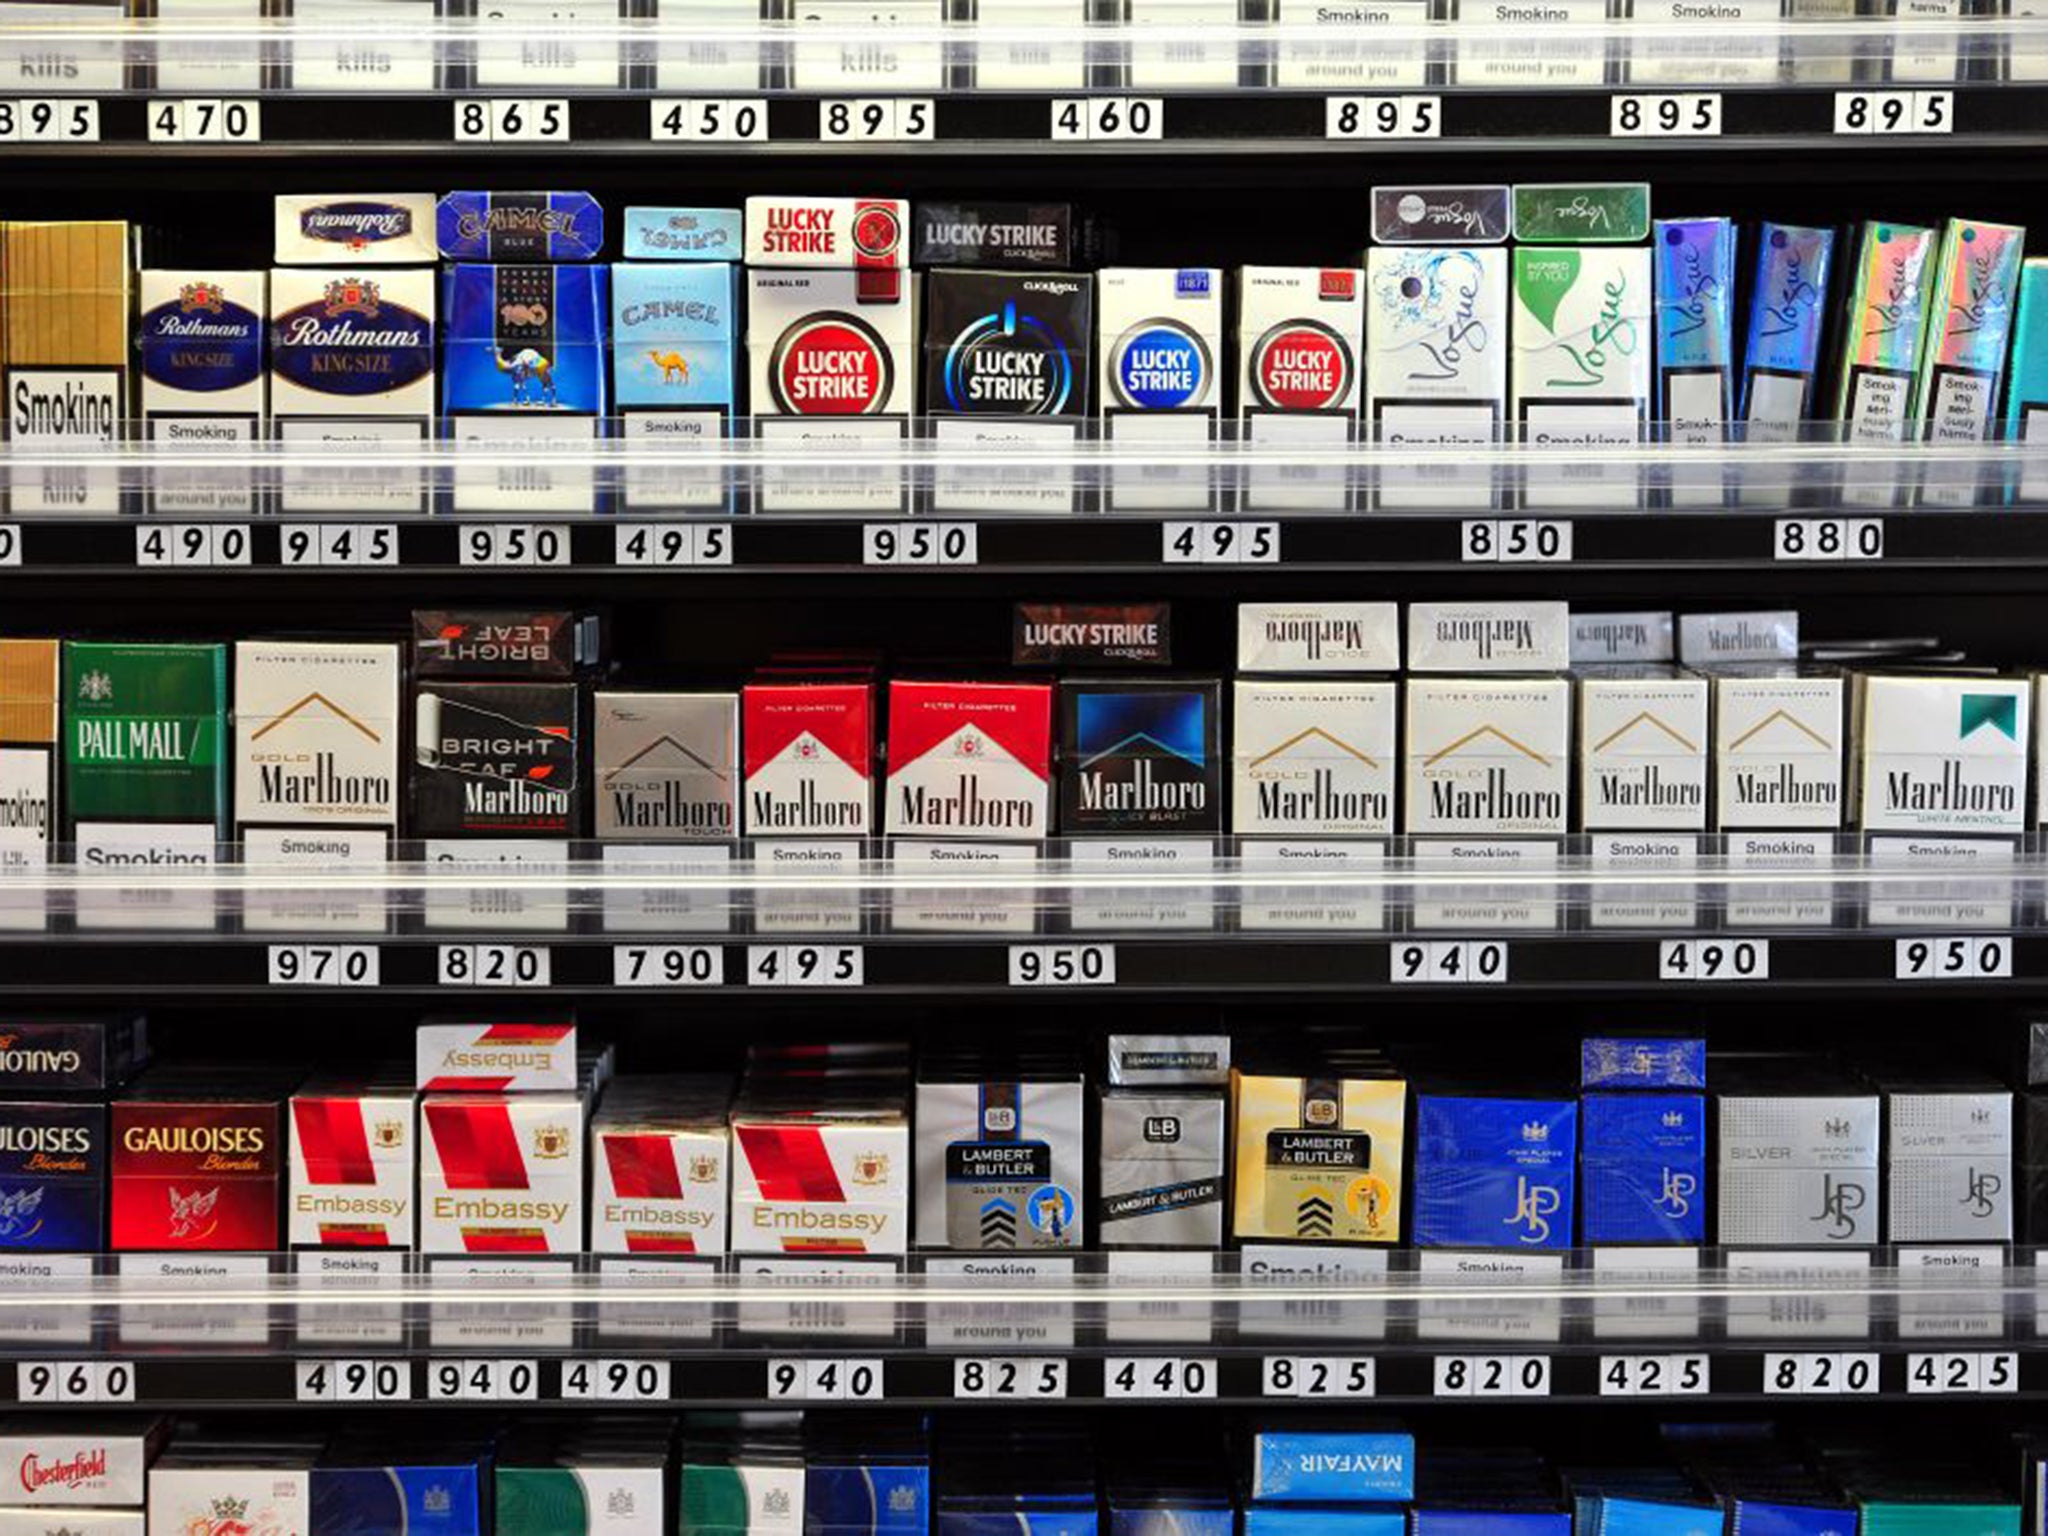 https://static.independent.co.uk/s3fs-public/thumbnails/image/2015/02/23/23/8-Cigarette-Packets-AFP.jpg